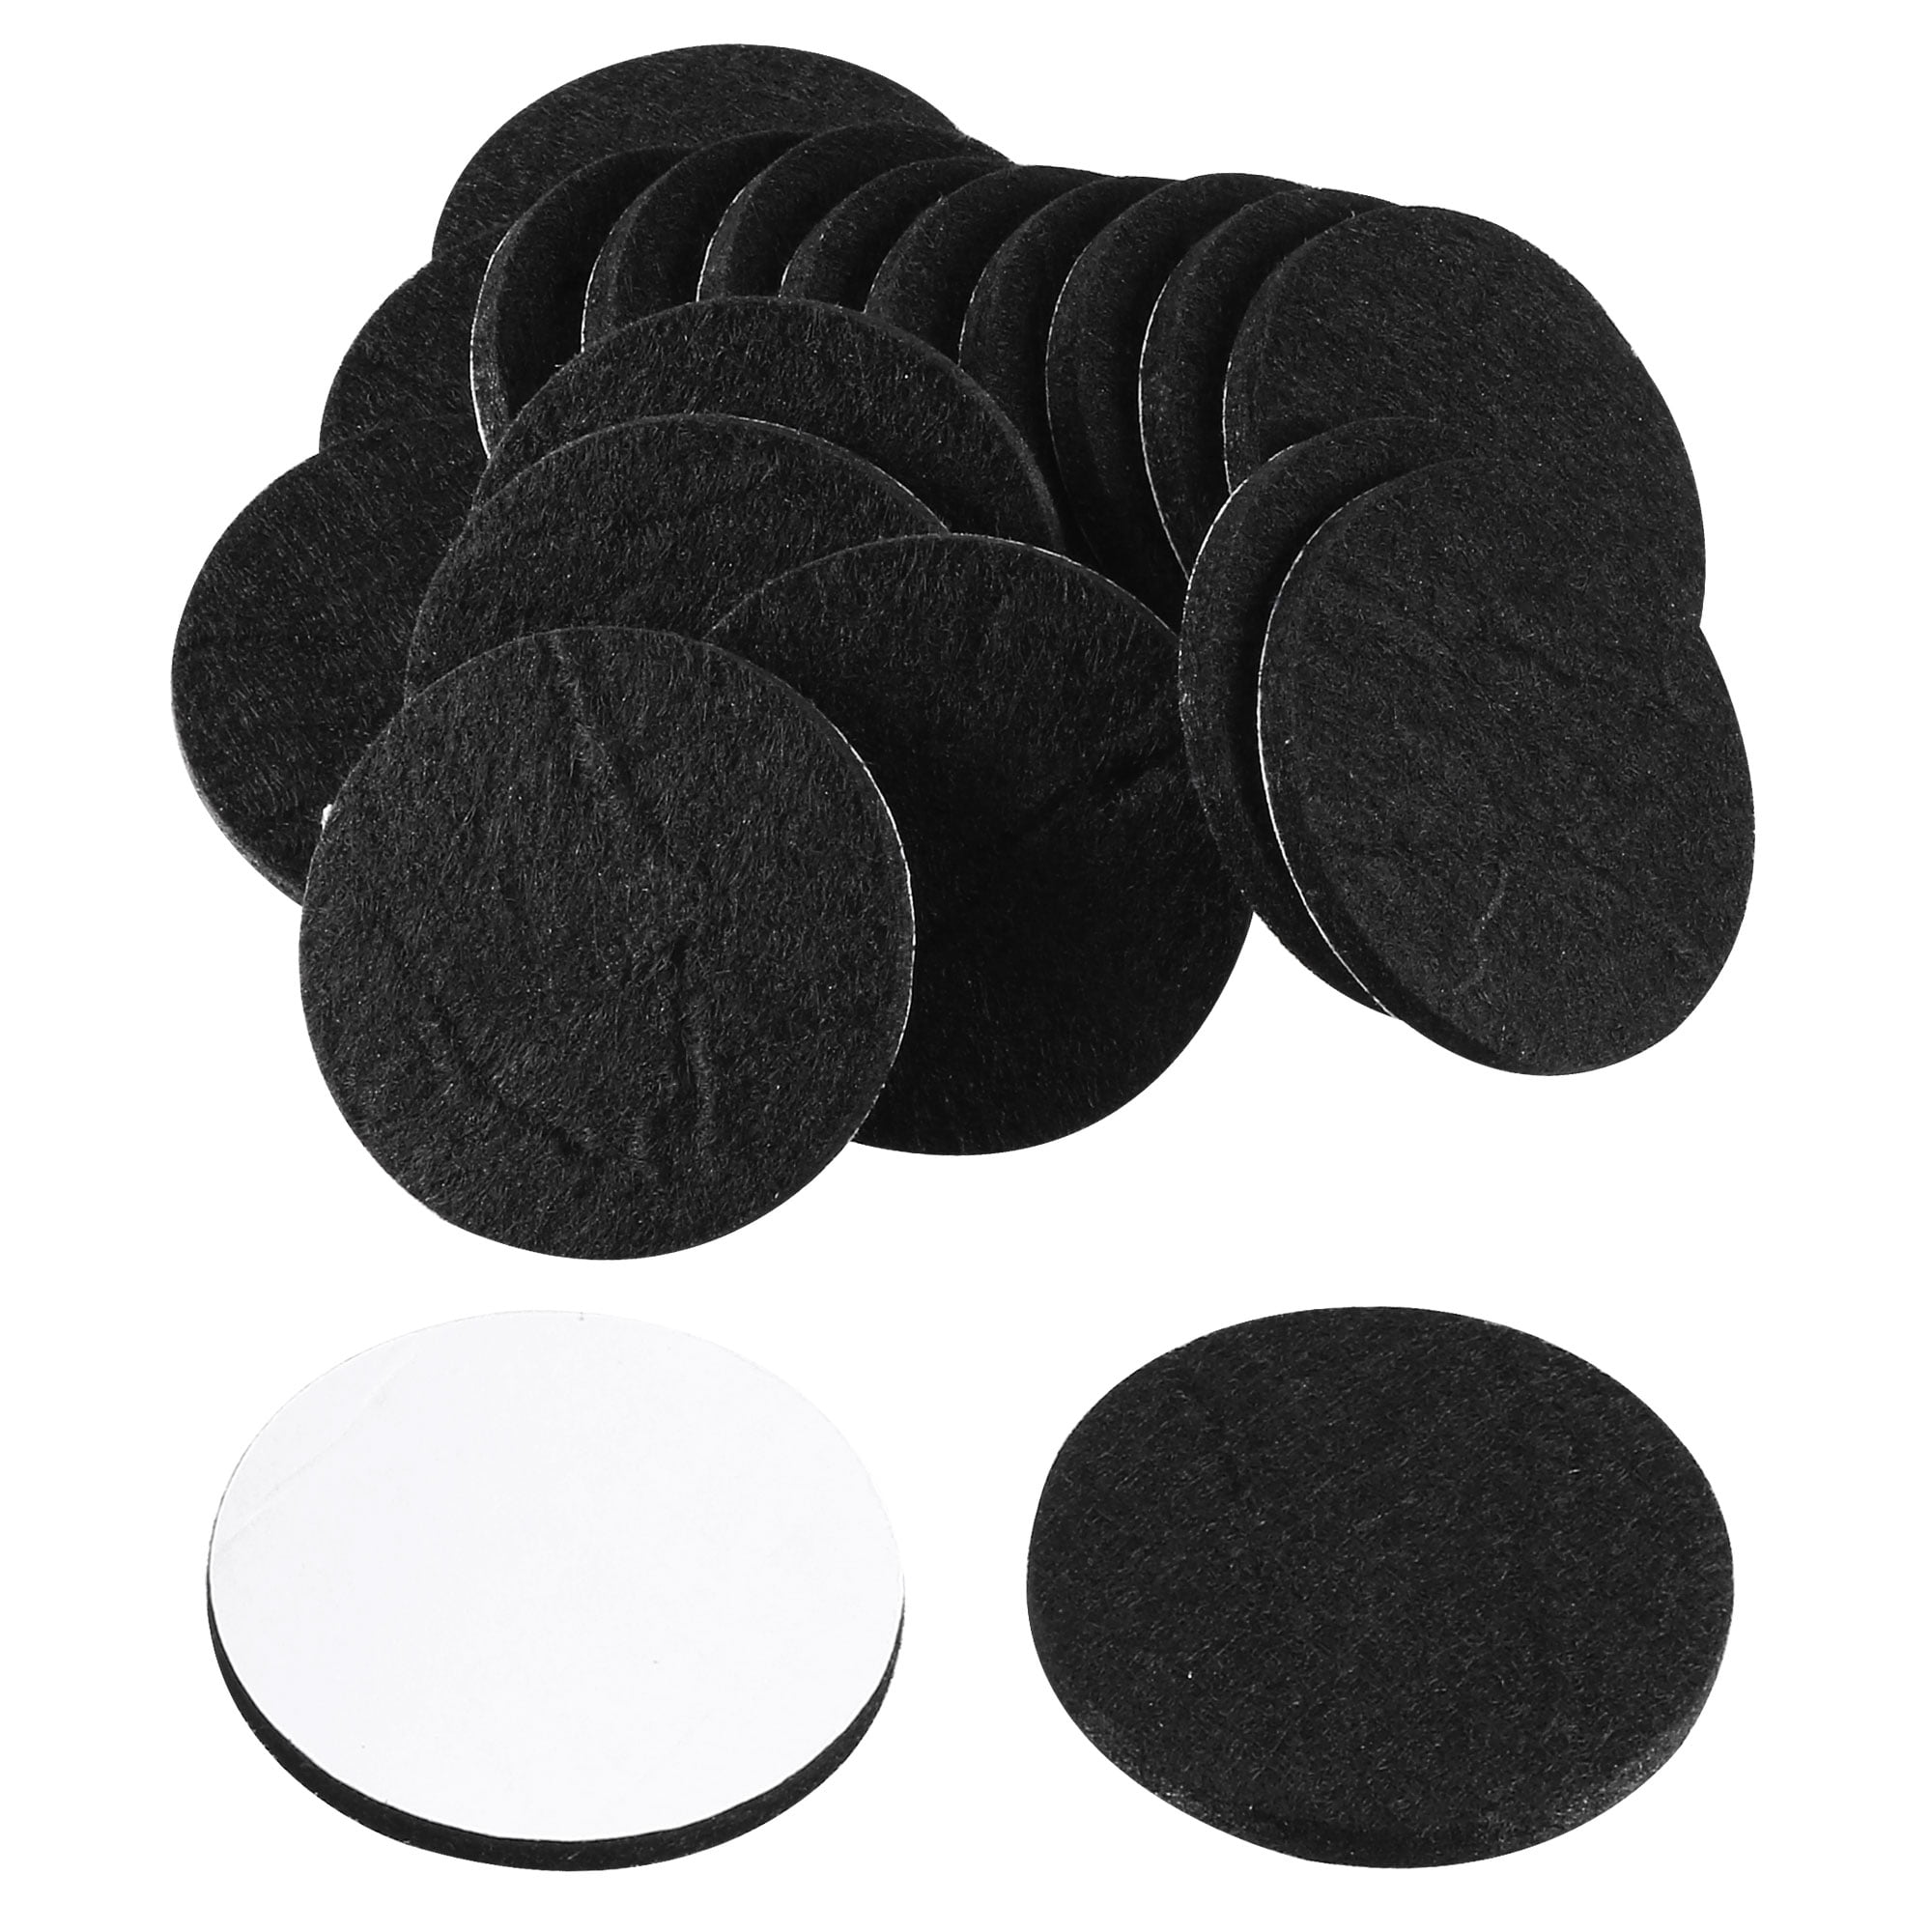 ECO FELTAC® - Black Round Felt Pads - Richelieu Hardware